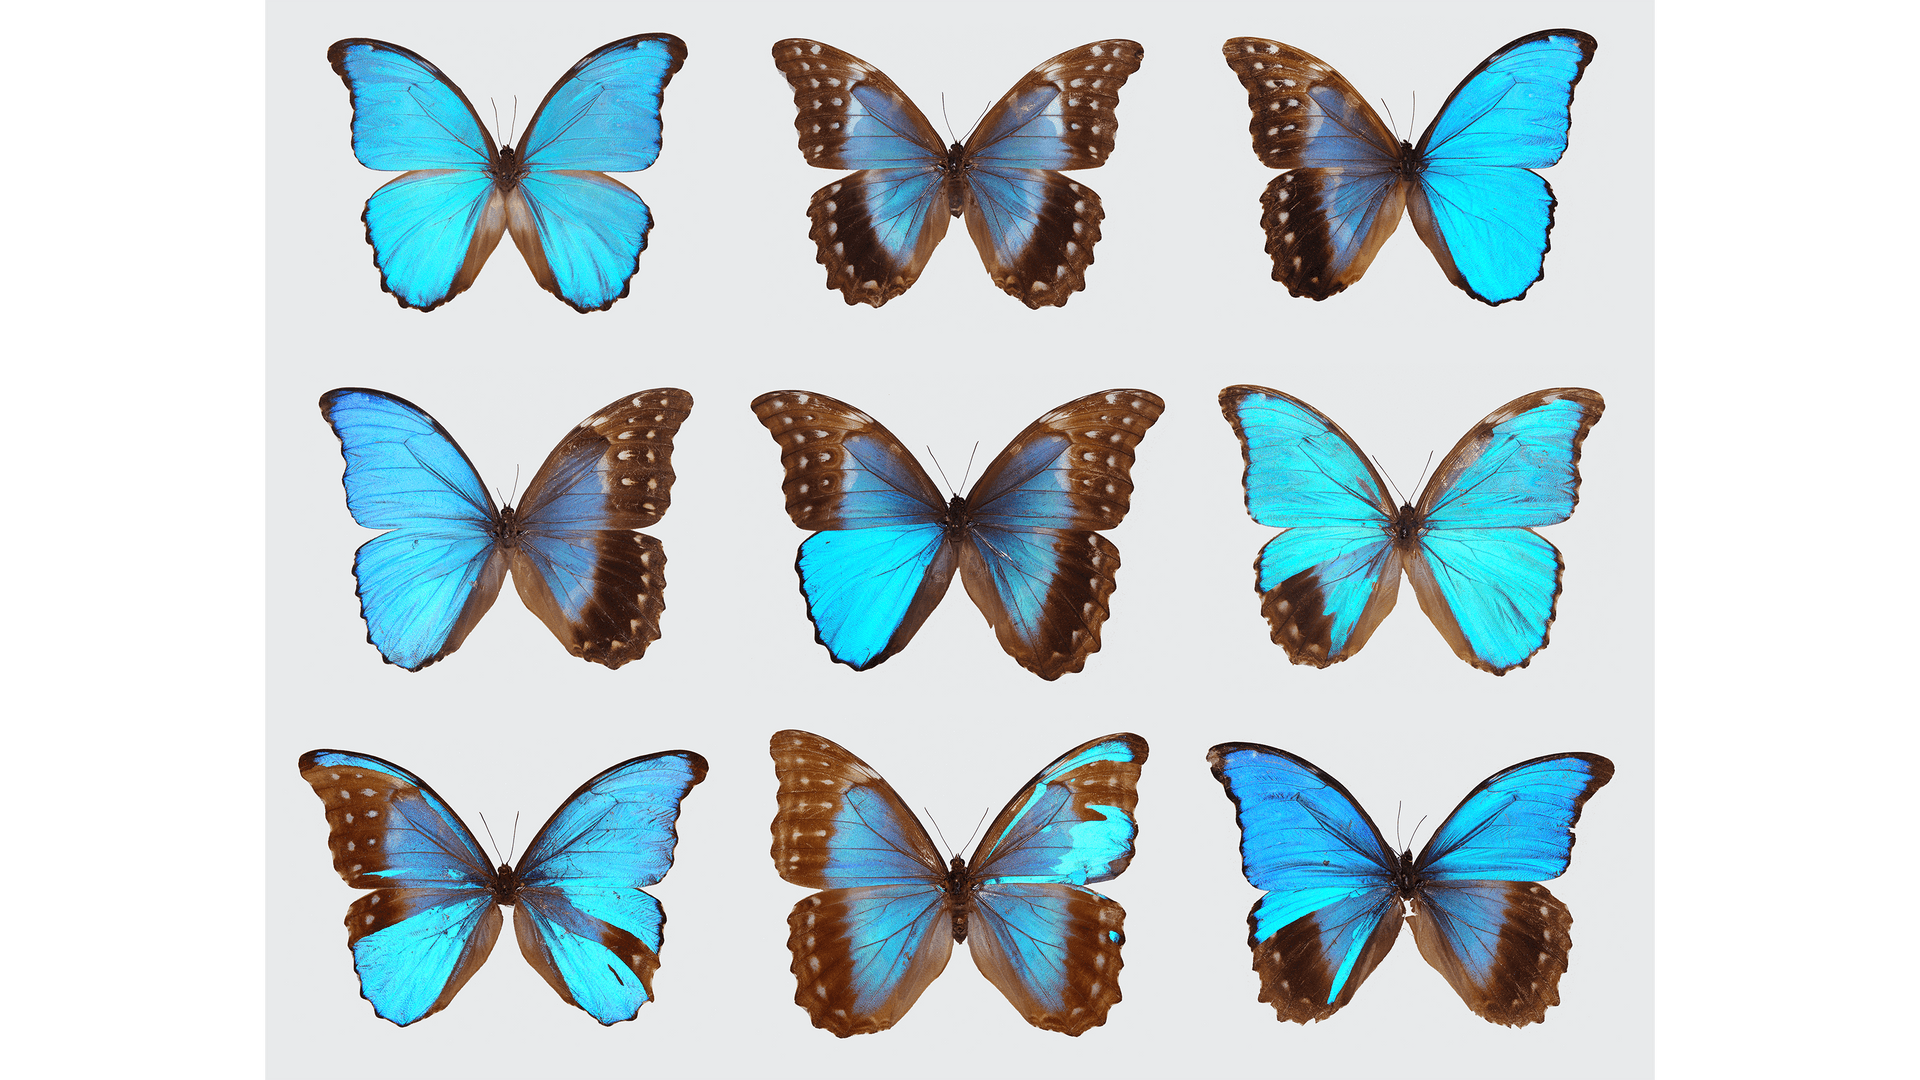 Gynandromorph butterflies